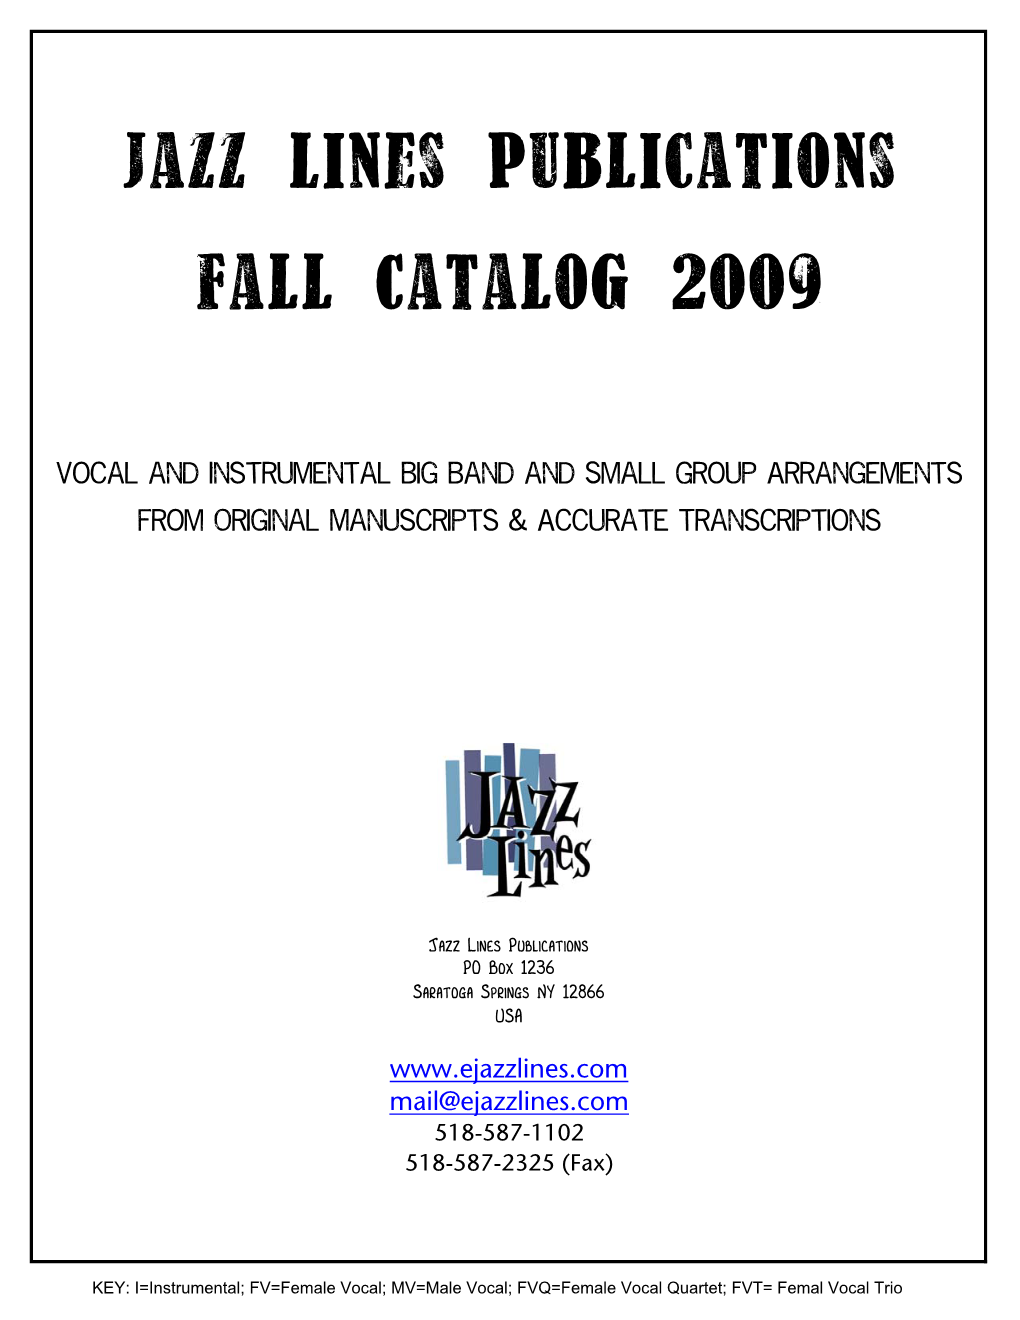 Jazz Lines Publications Fall Catalog 2009